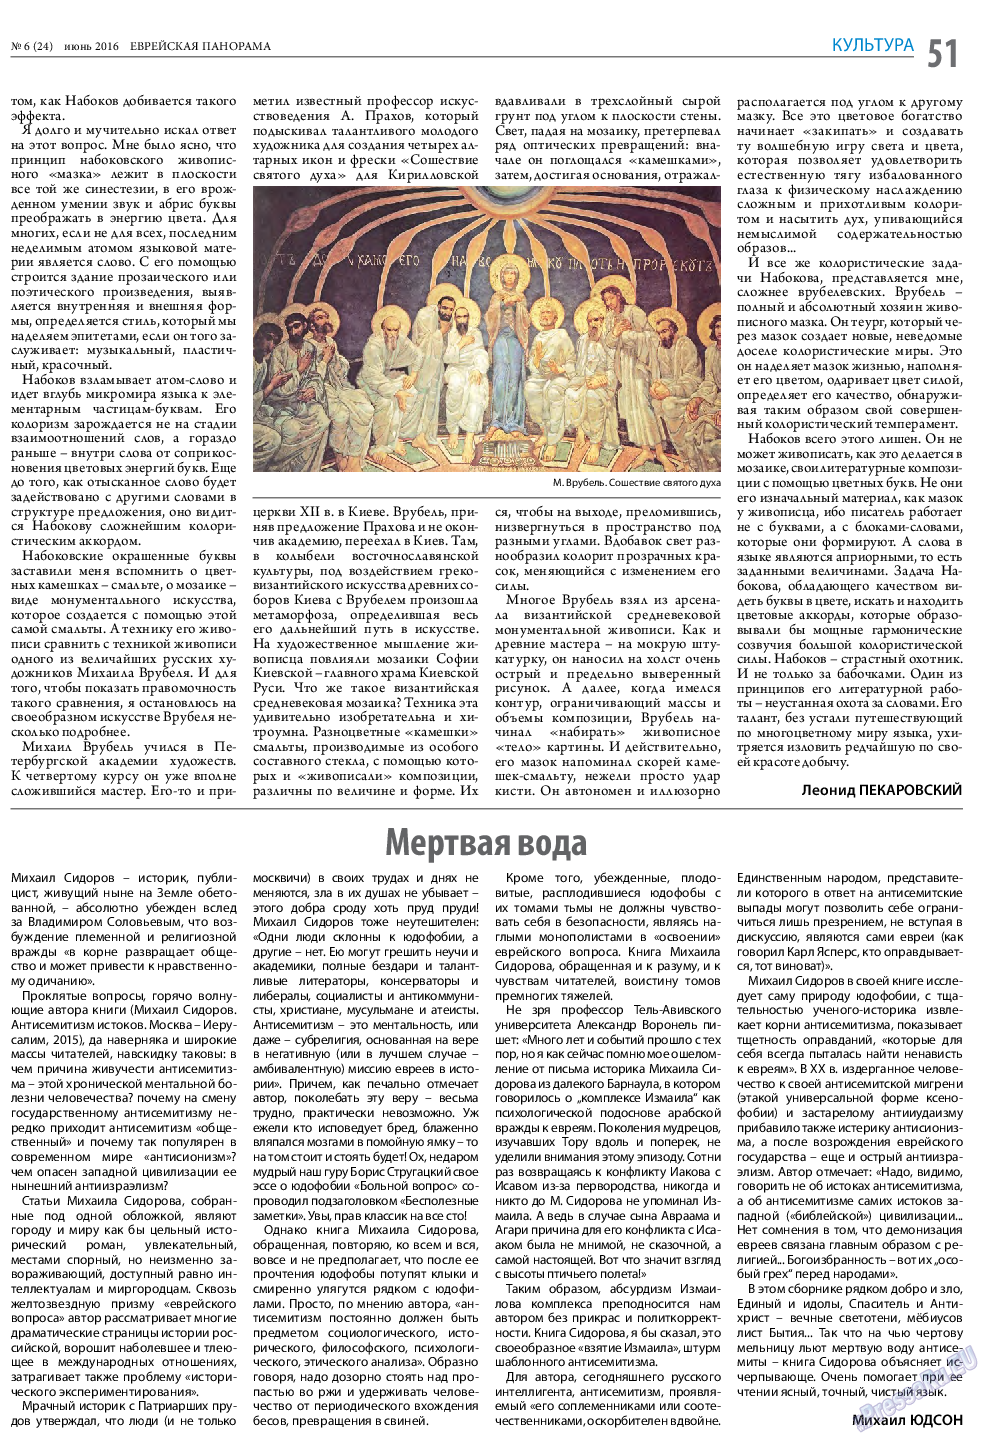 Еврейская панорама, газета. 2016 №6 стр.51